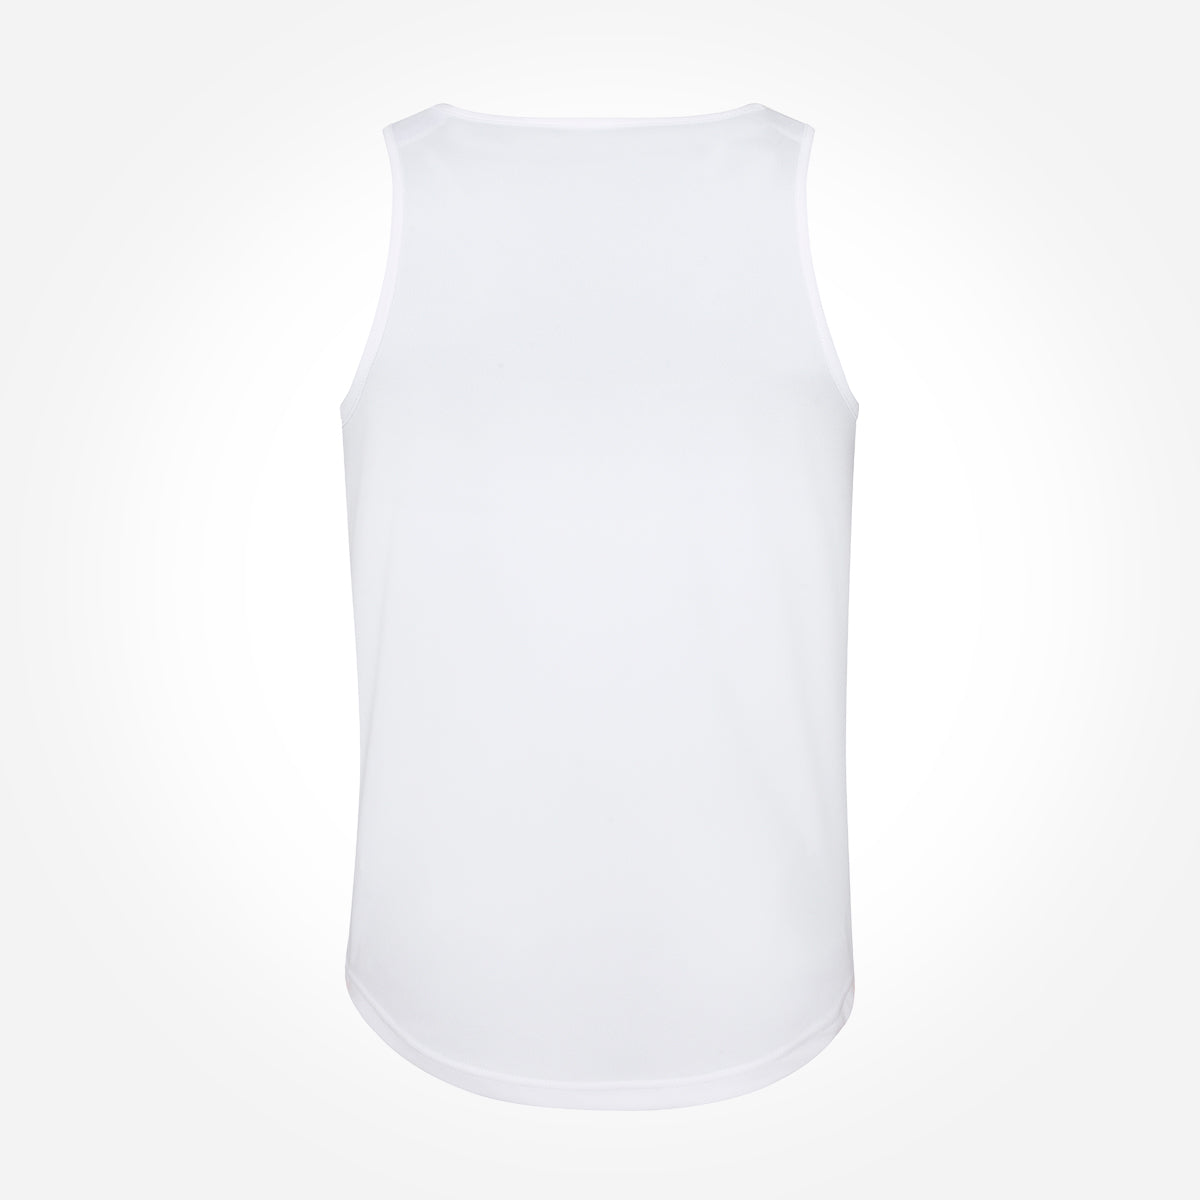 UK Padel Kids cool vest (large UK Padel logo)